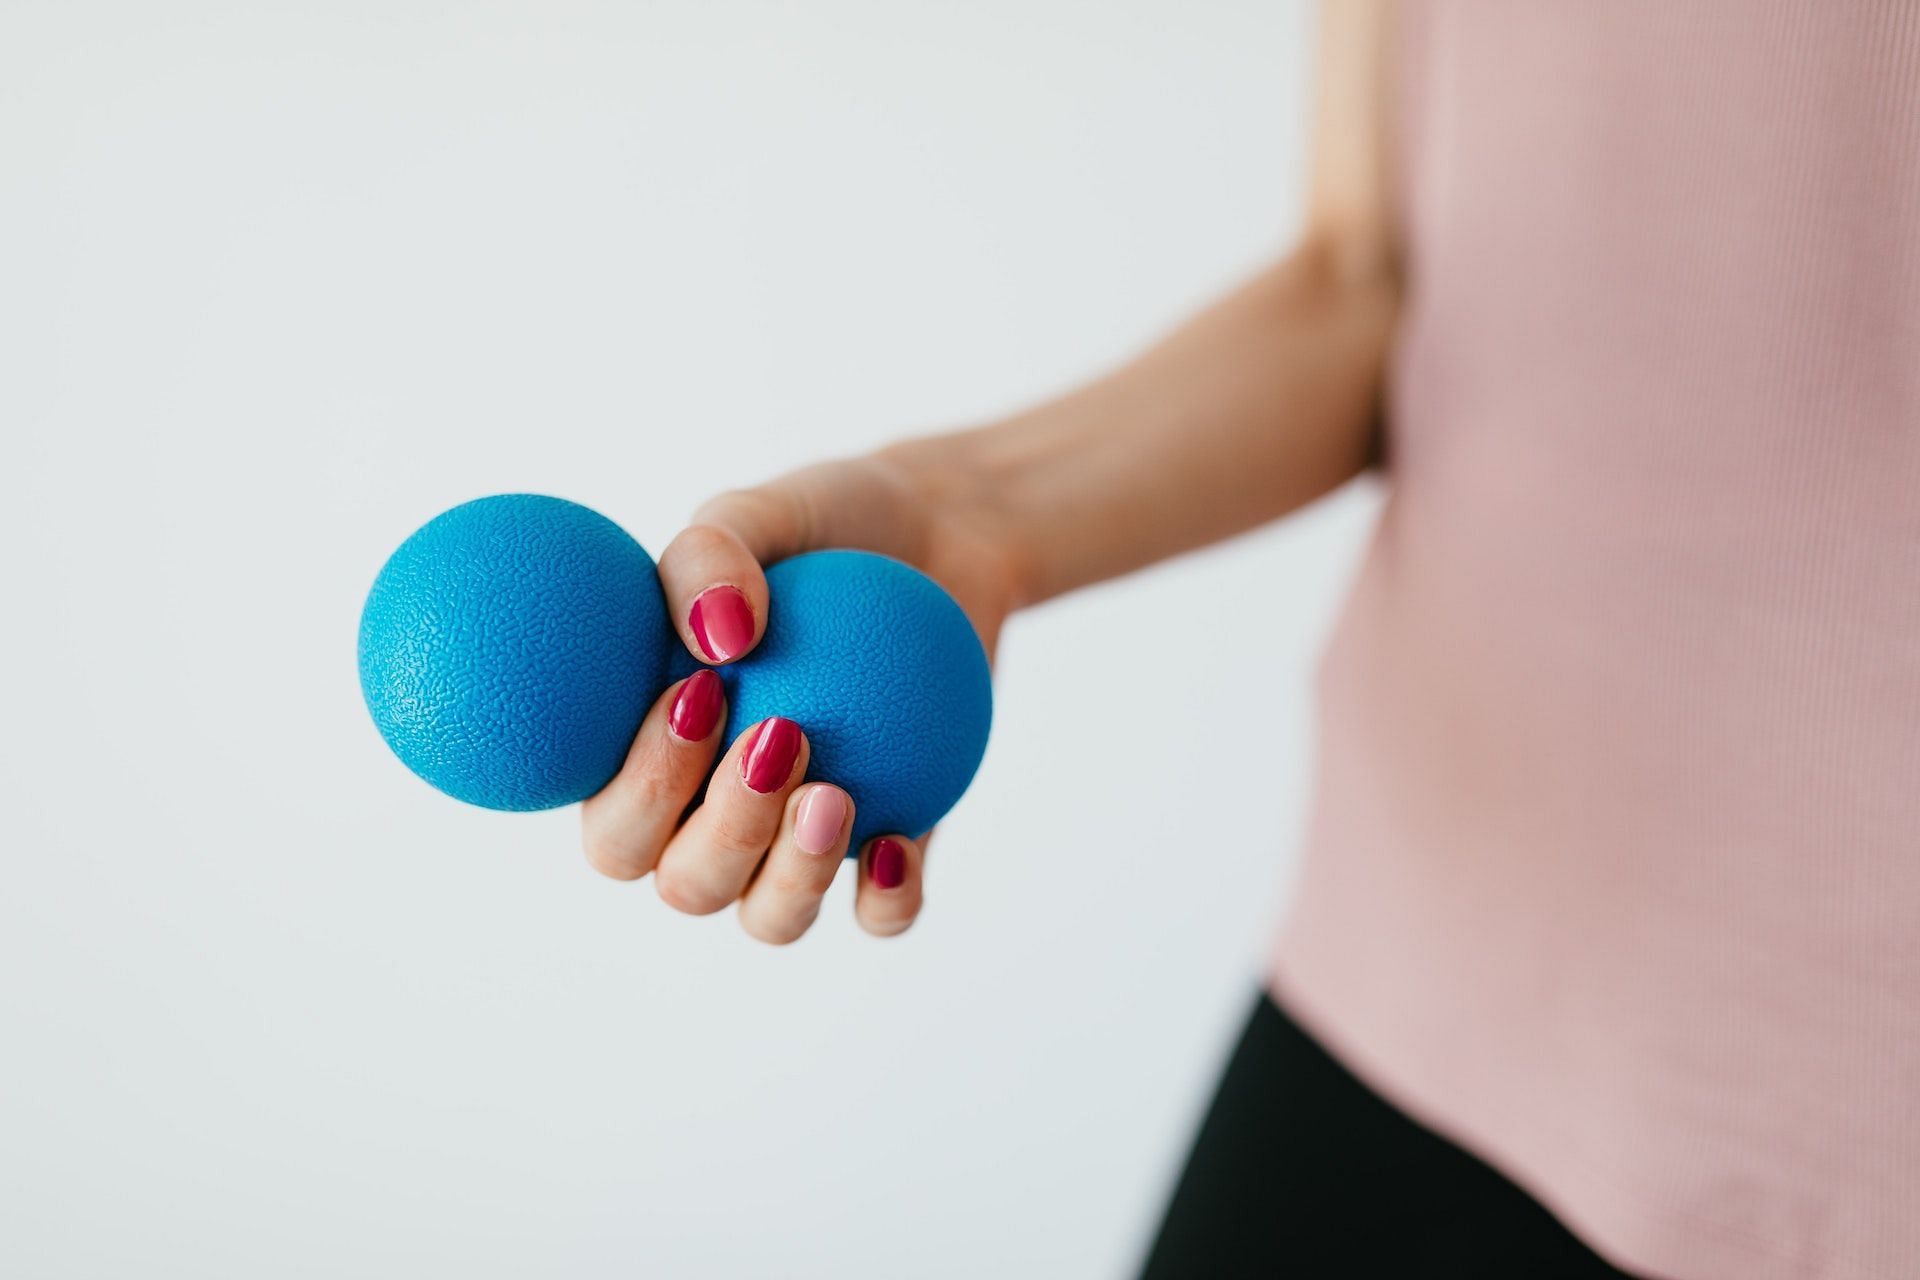 Ball squeeze improves wrist mobility. (Photo via Pexels/Karolina Grabowska)